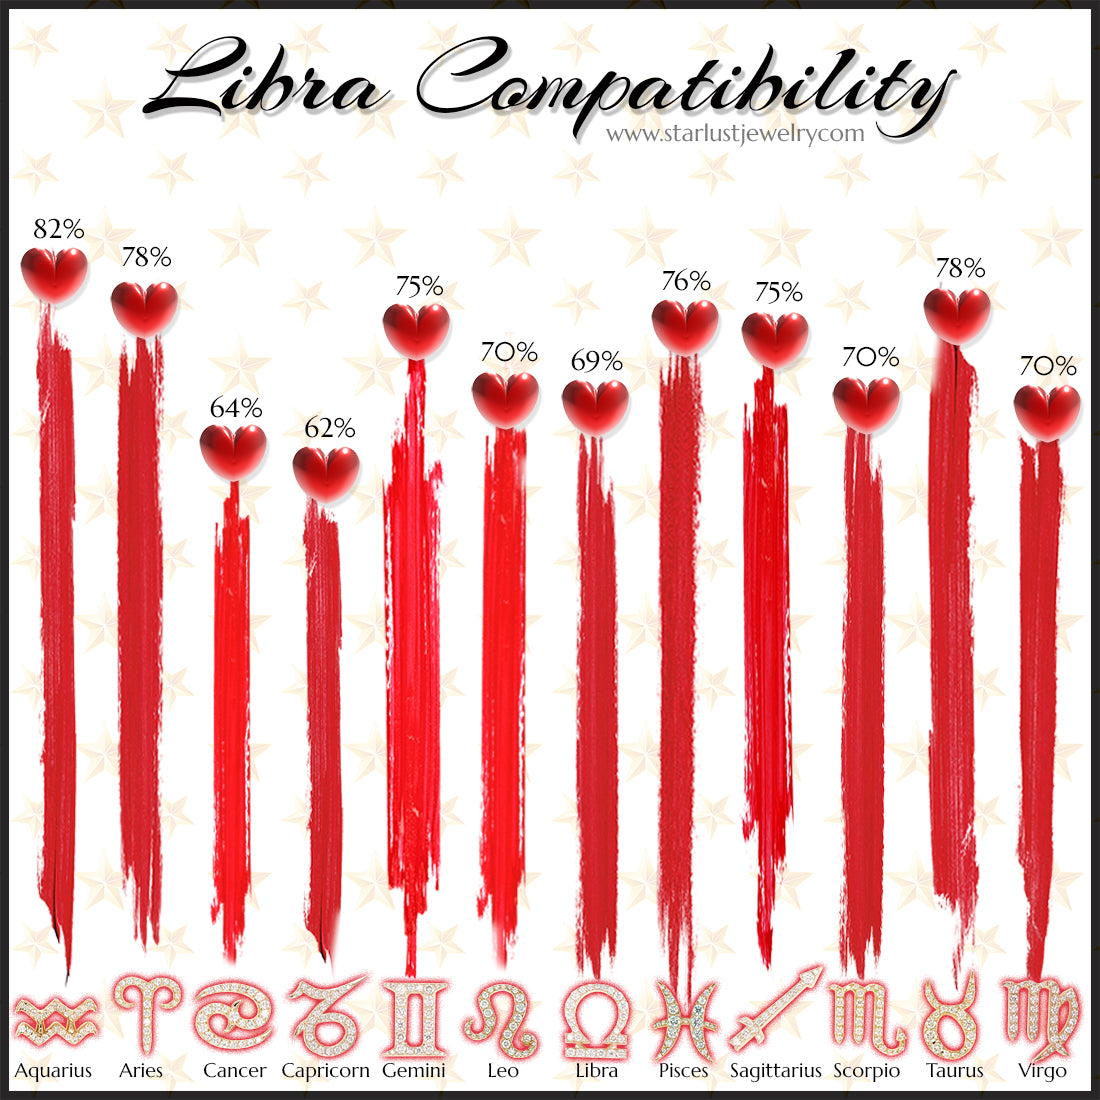 Libra Compatibility Across the Zodiac Signs